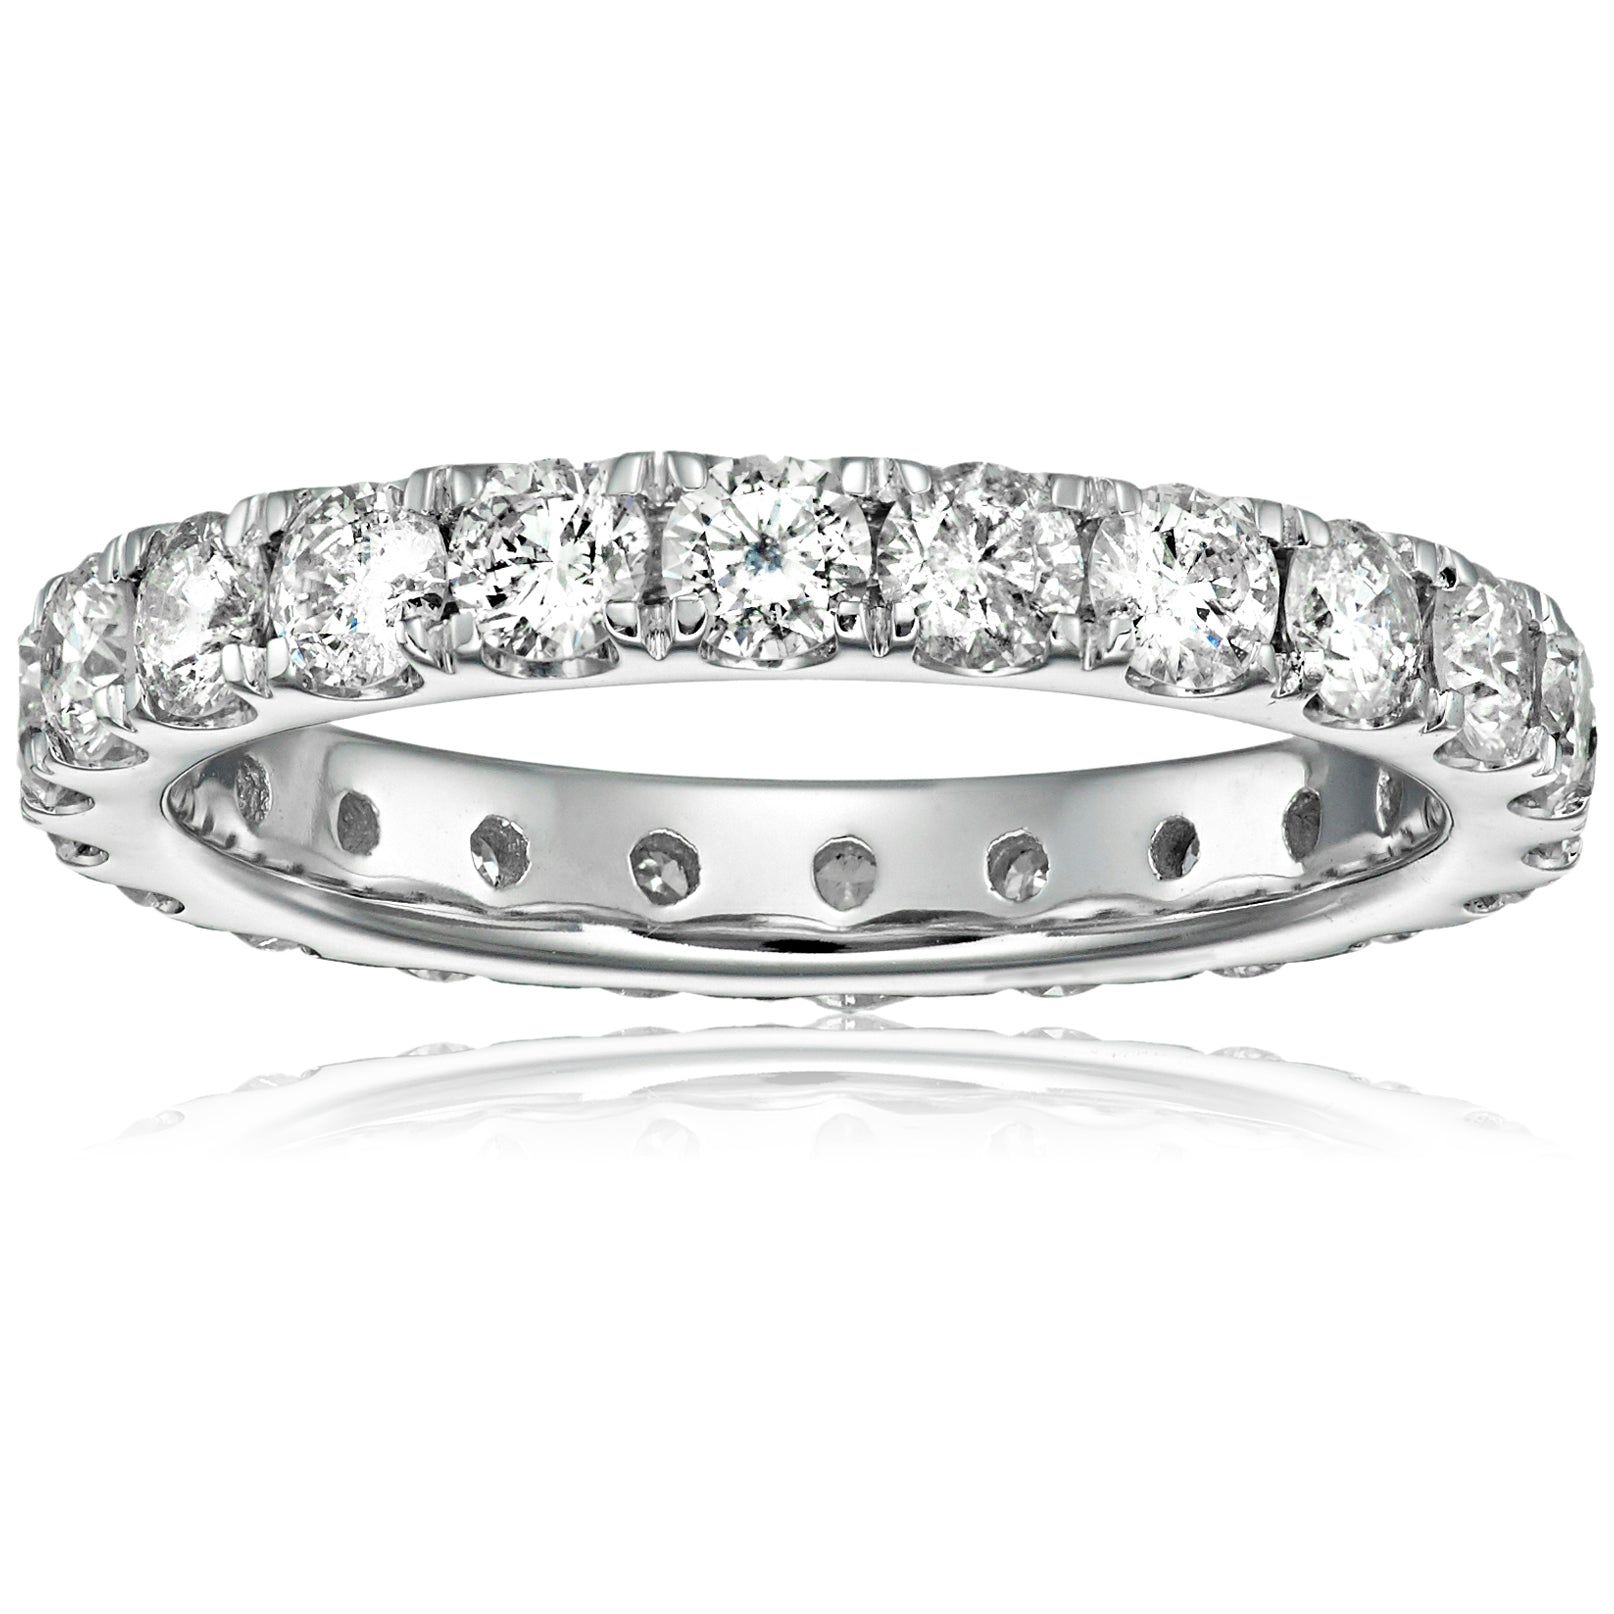 5 cttw Diamond Wedding Anniversary Band for Women, Full Eternity Round Lab Grown Diamond Engagement Ring 18K White Gold Prong Set